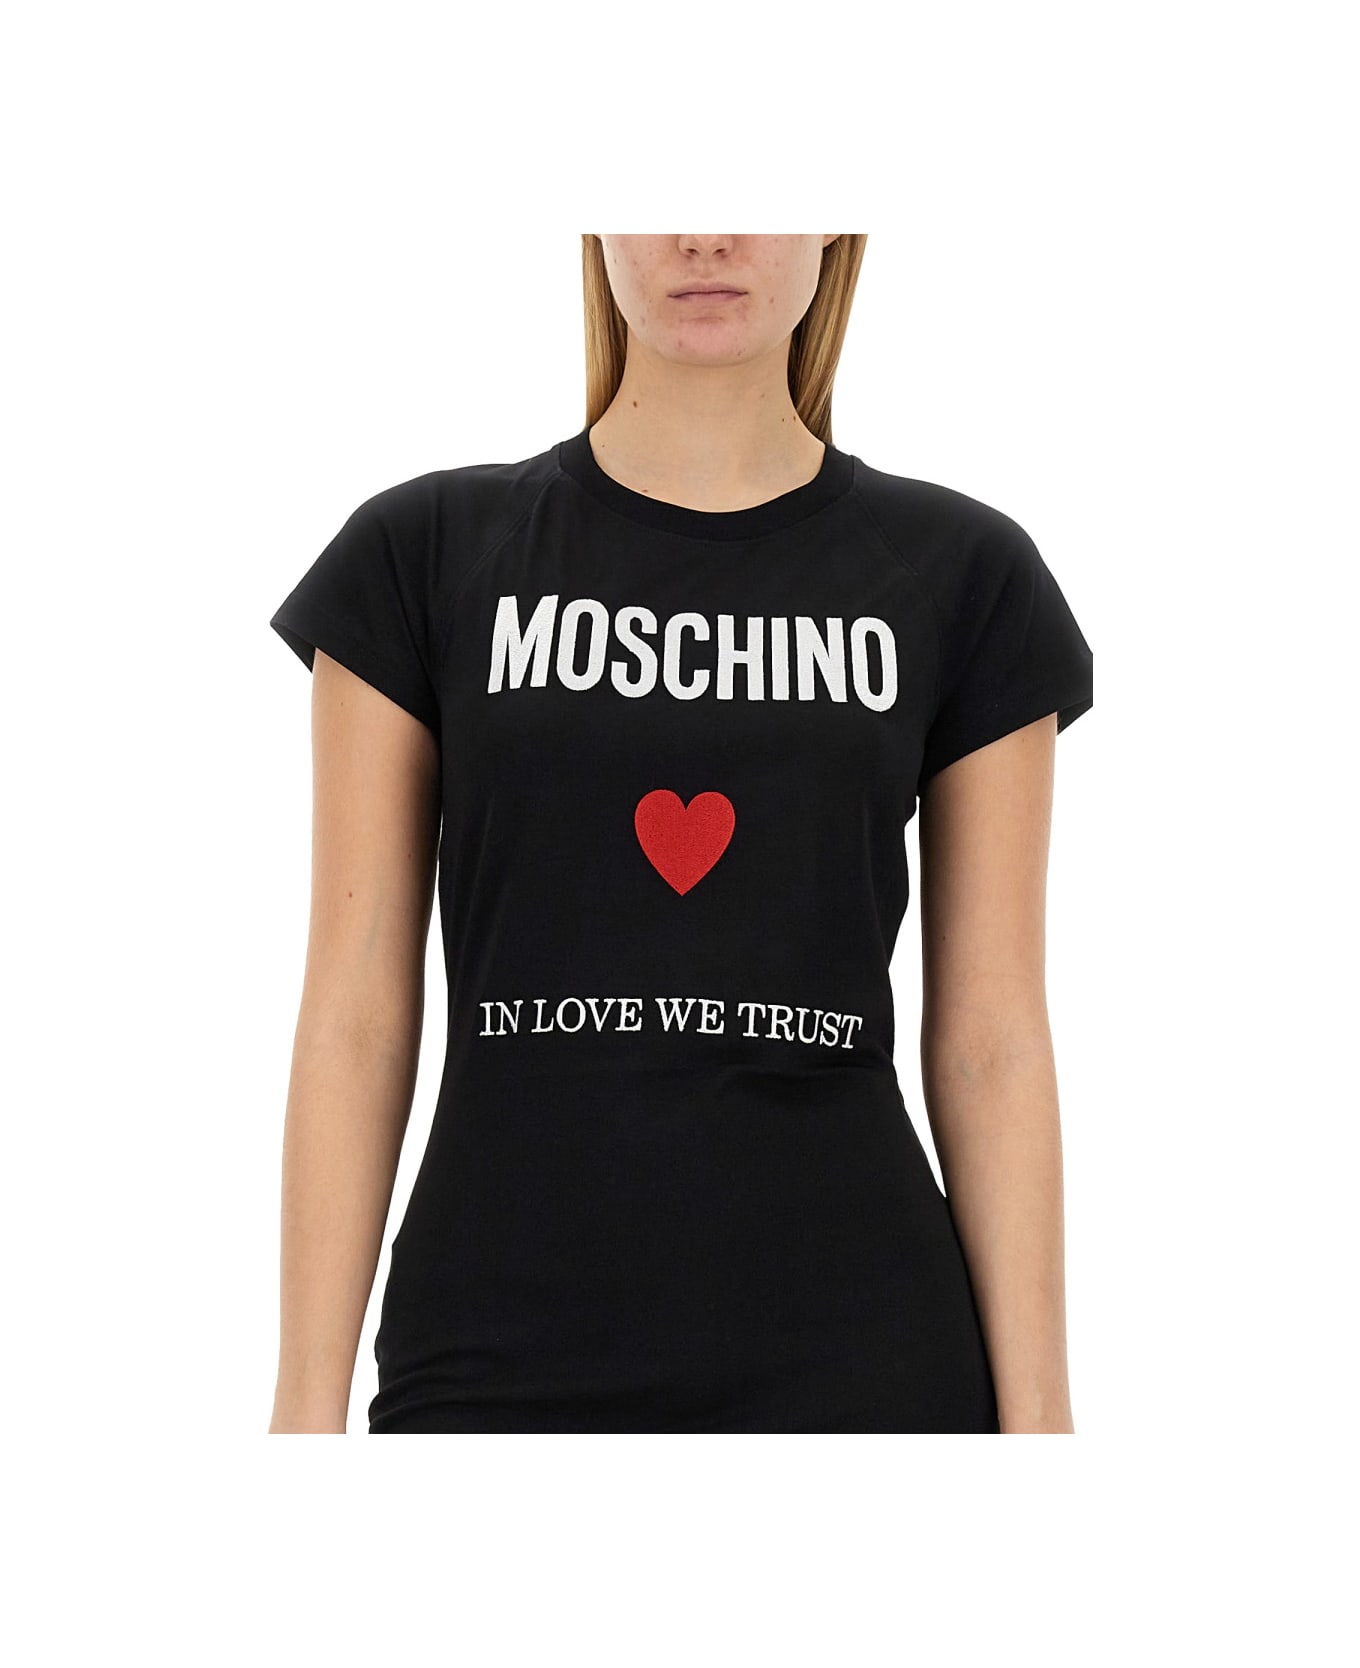 Moschino Dress With Logo - BLACK